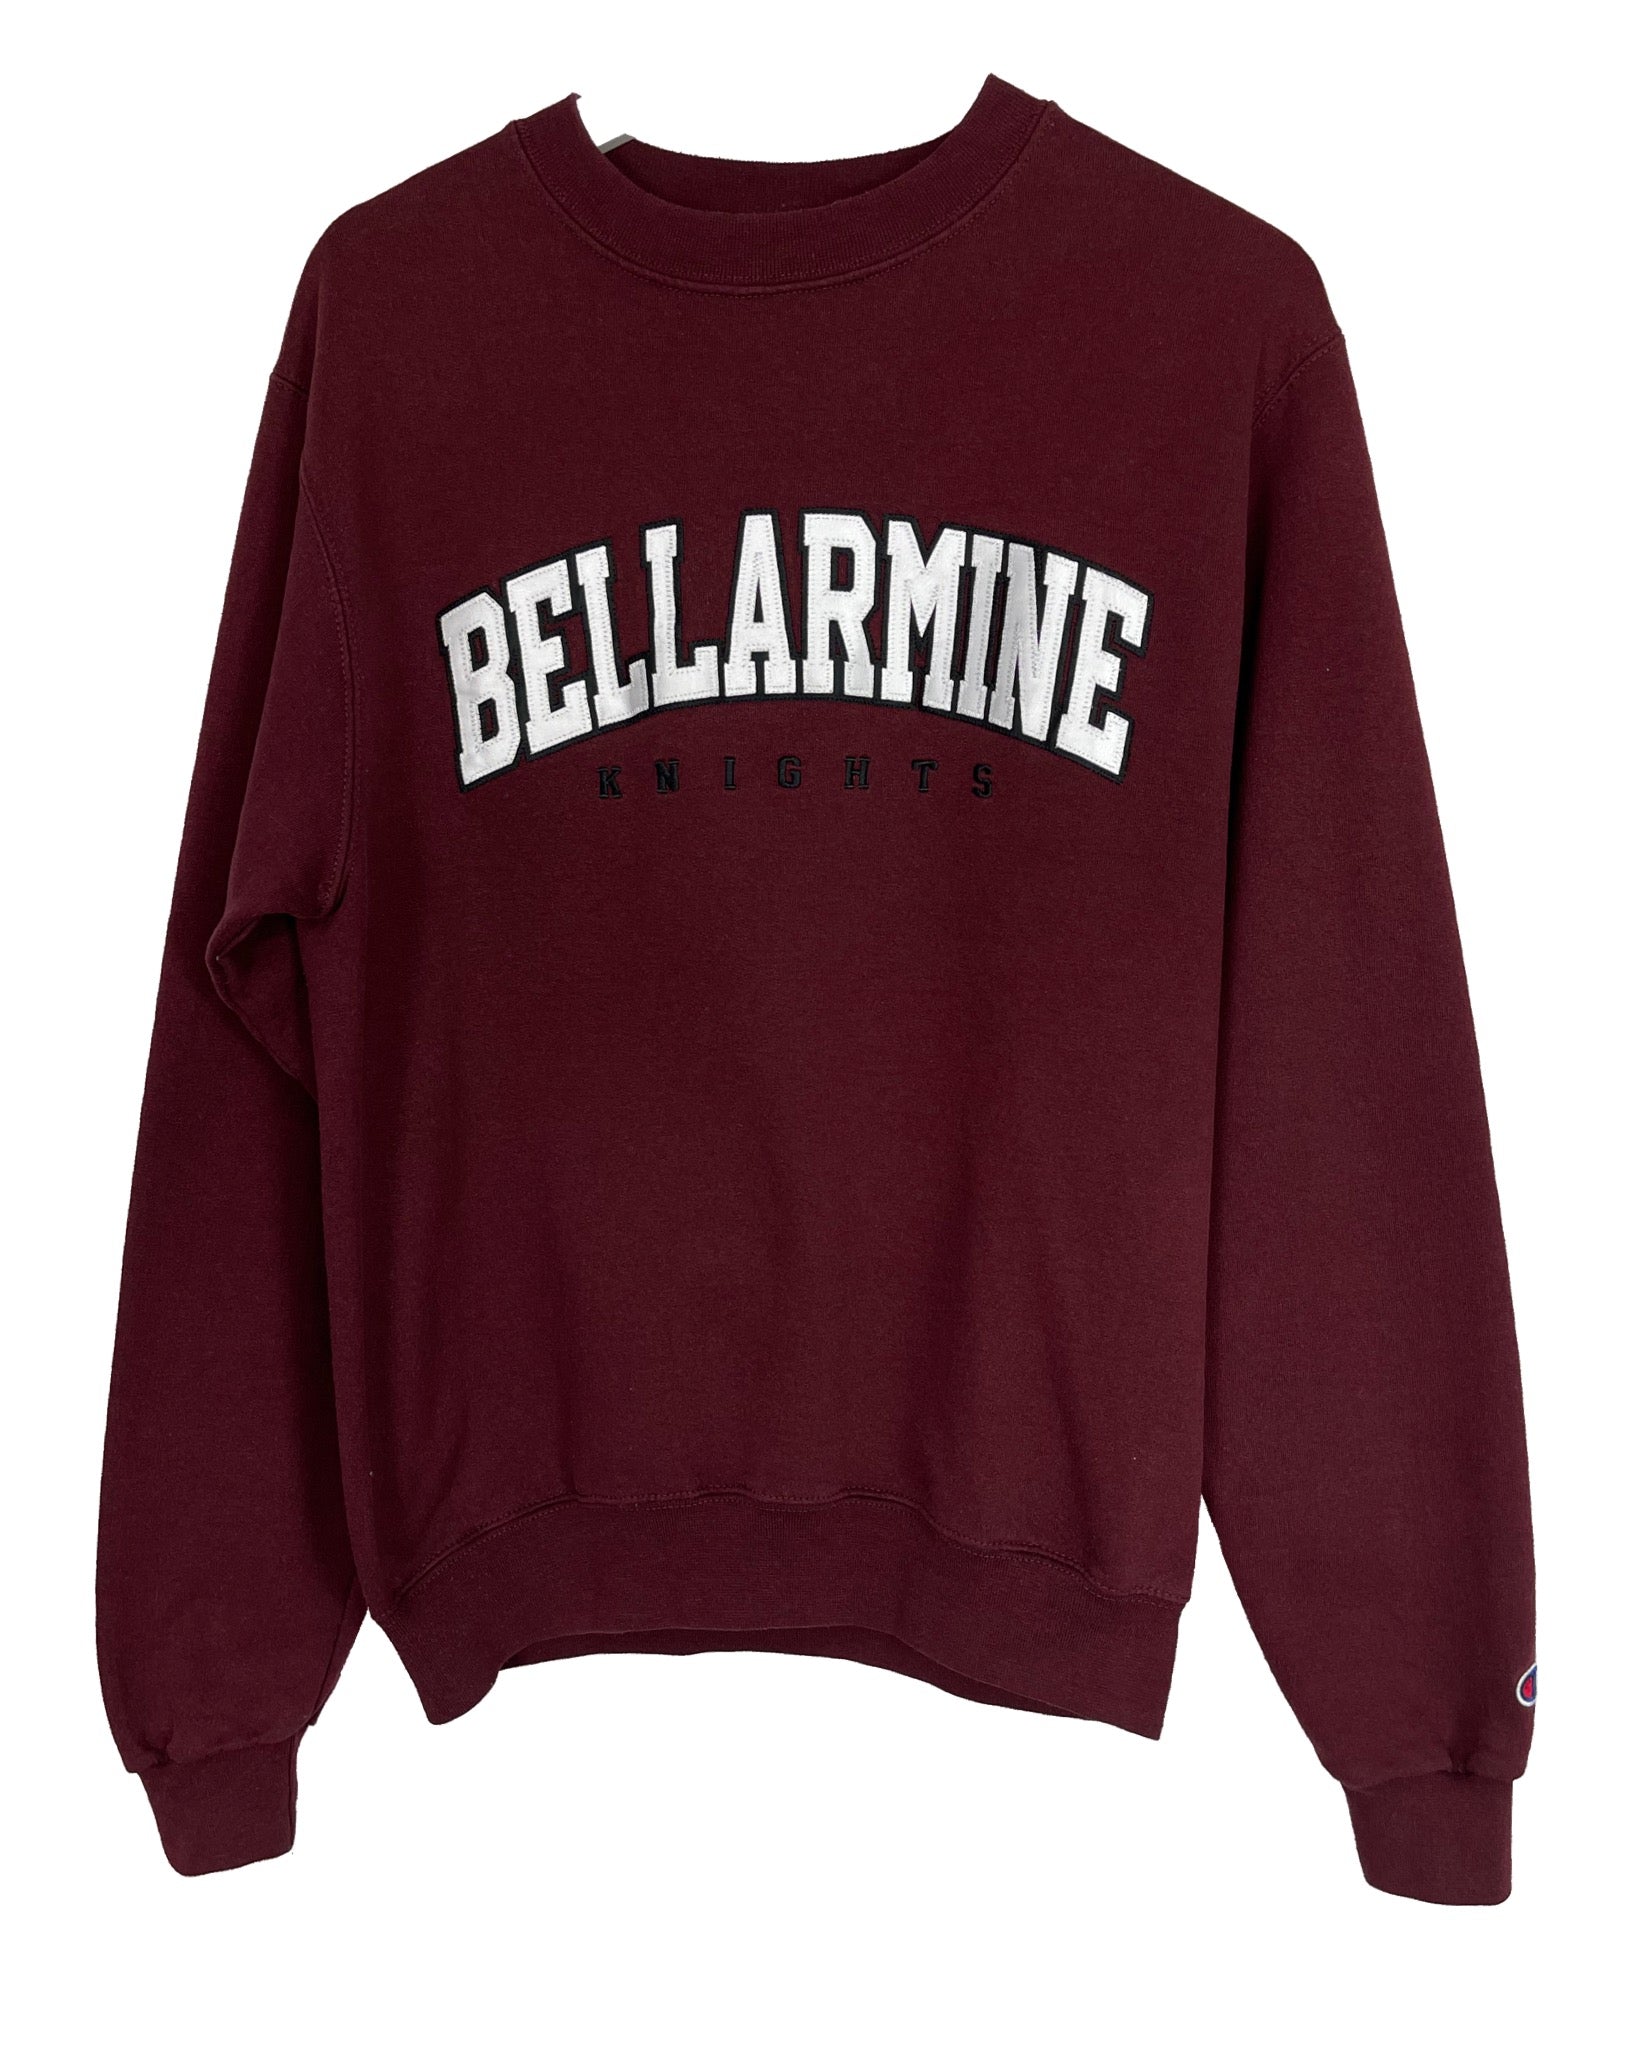  Sweatshirt Champion Sweat - Bellarmine University - S - PLOMOSTORE